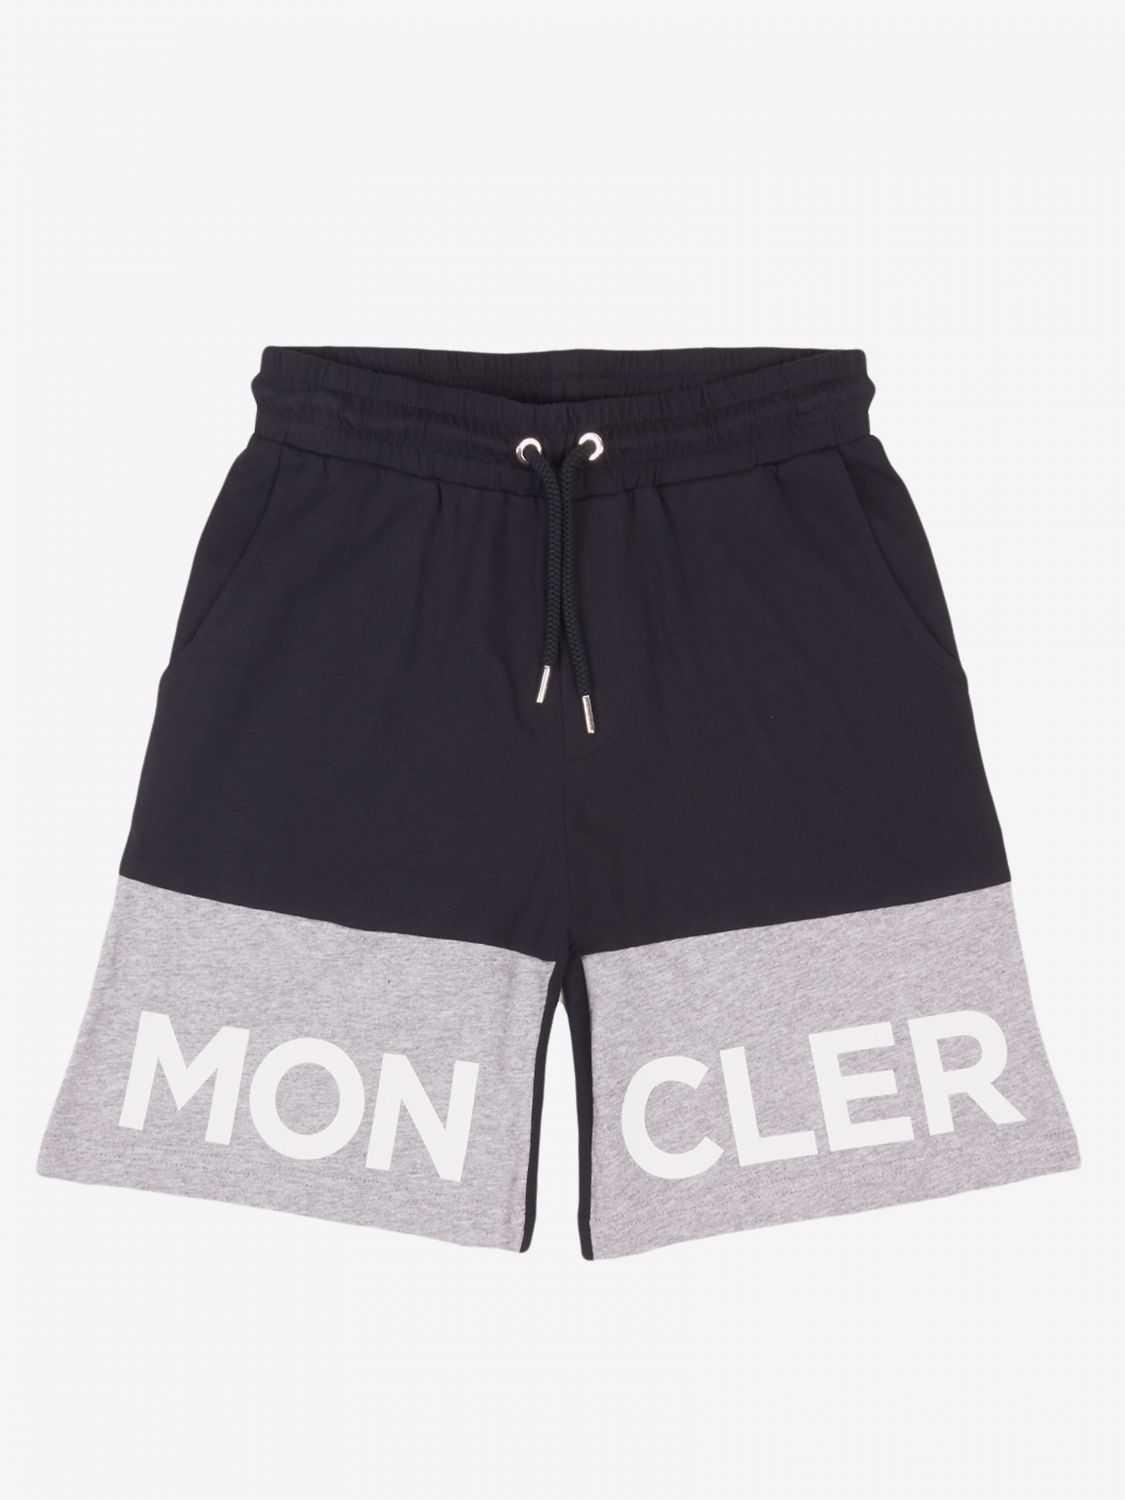 moncler shorts grey